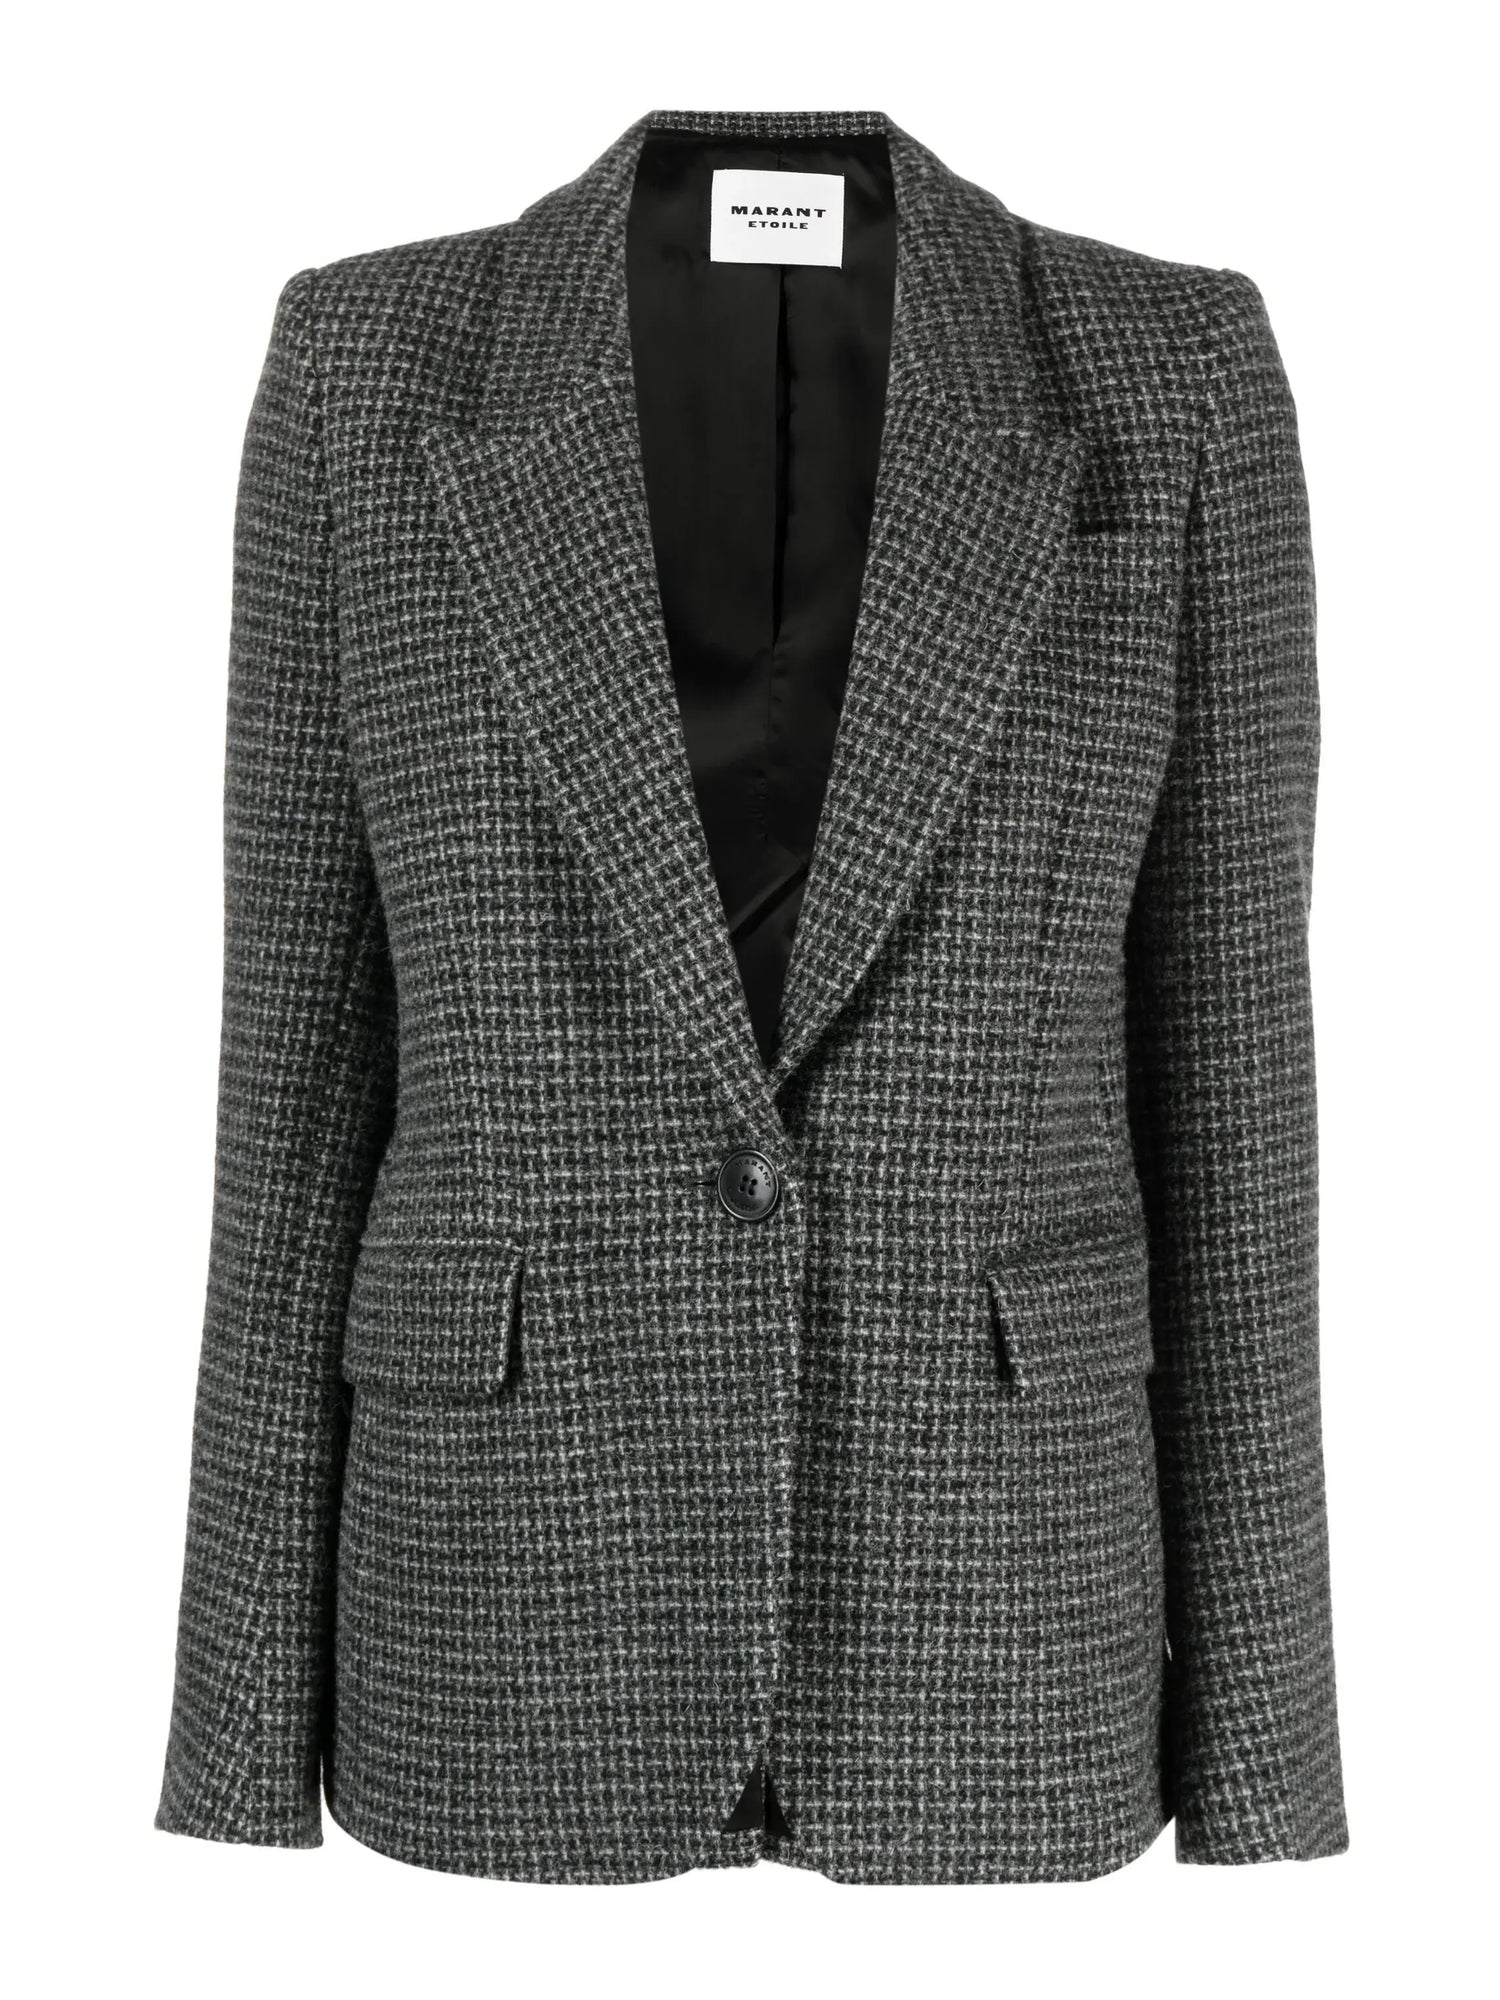 Kerstin jacket, grey tweed